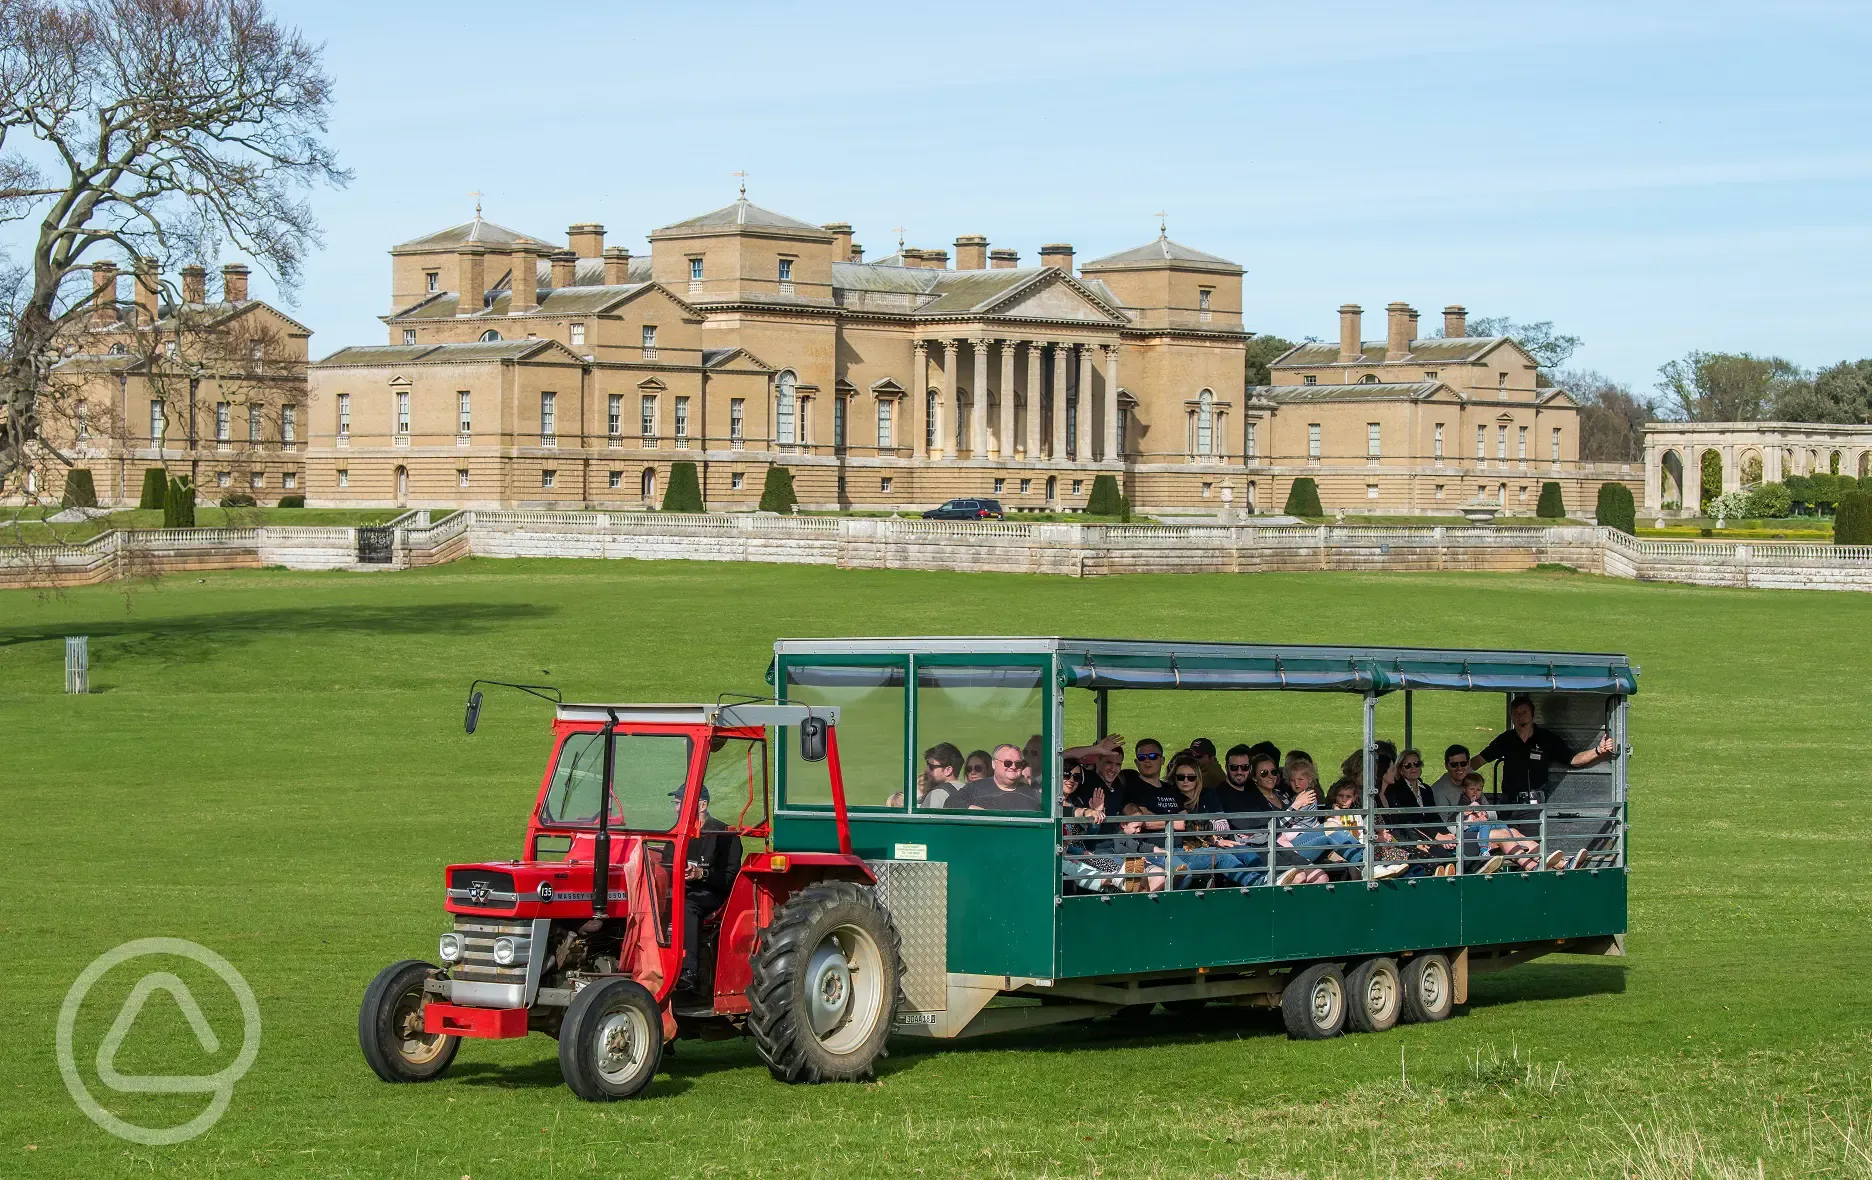 Tractor tours around Holkham Hall